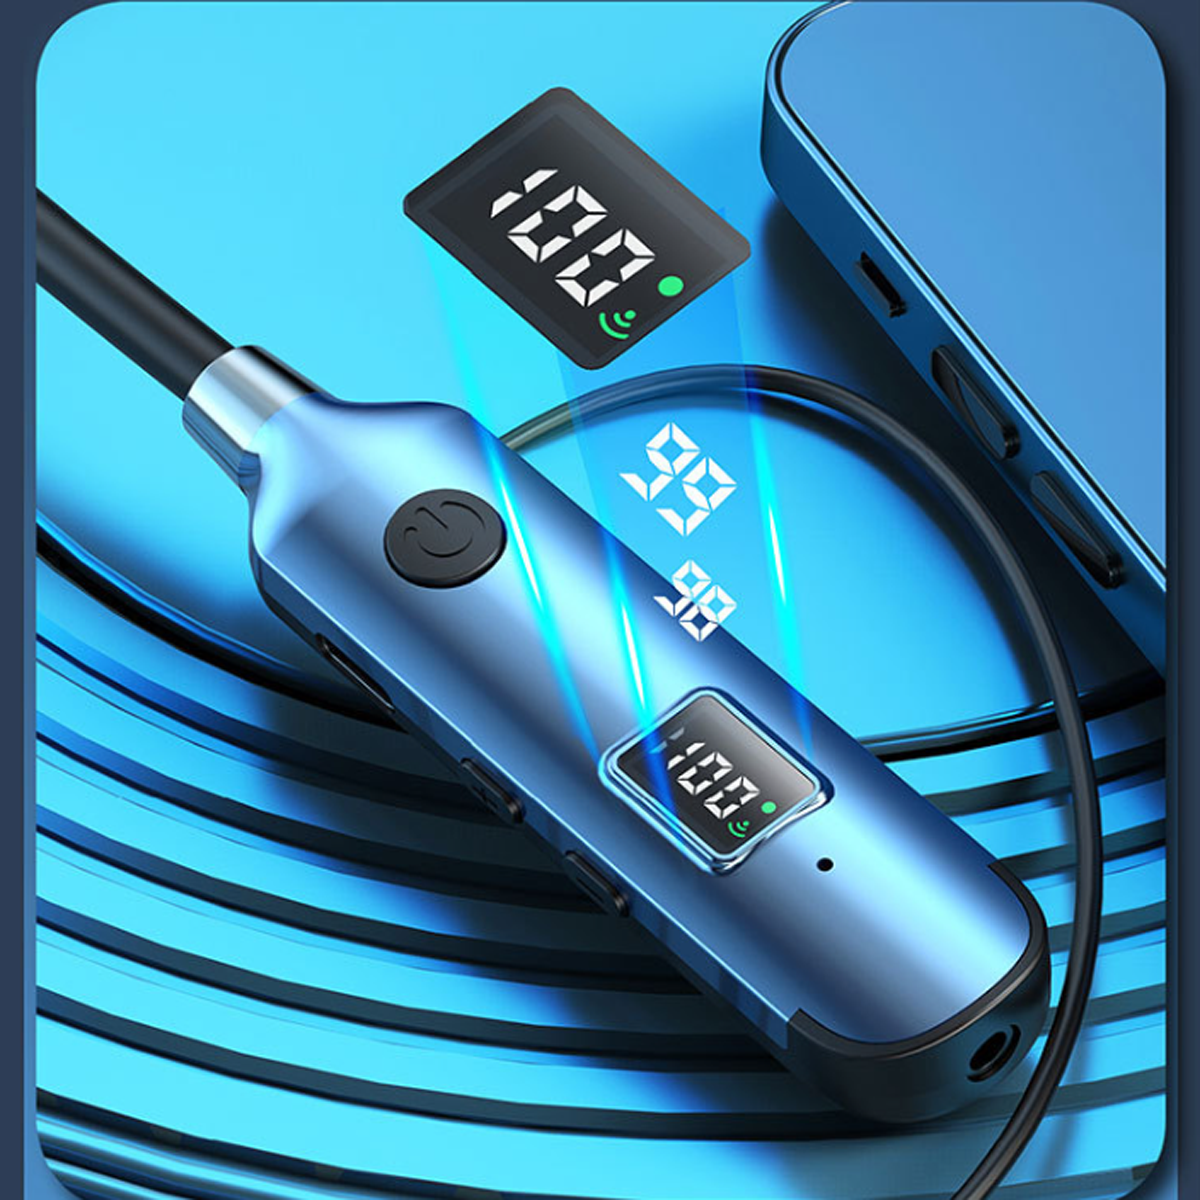 ENBAOXIN drahtlose Headset Headset In-ear Bluetooth Blau drahtlose Kopfhörer mit Soundkarte, - Drahtloses Fernbedienung,